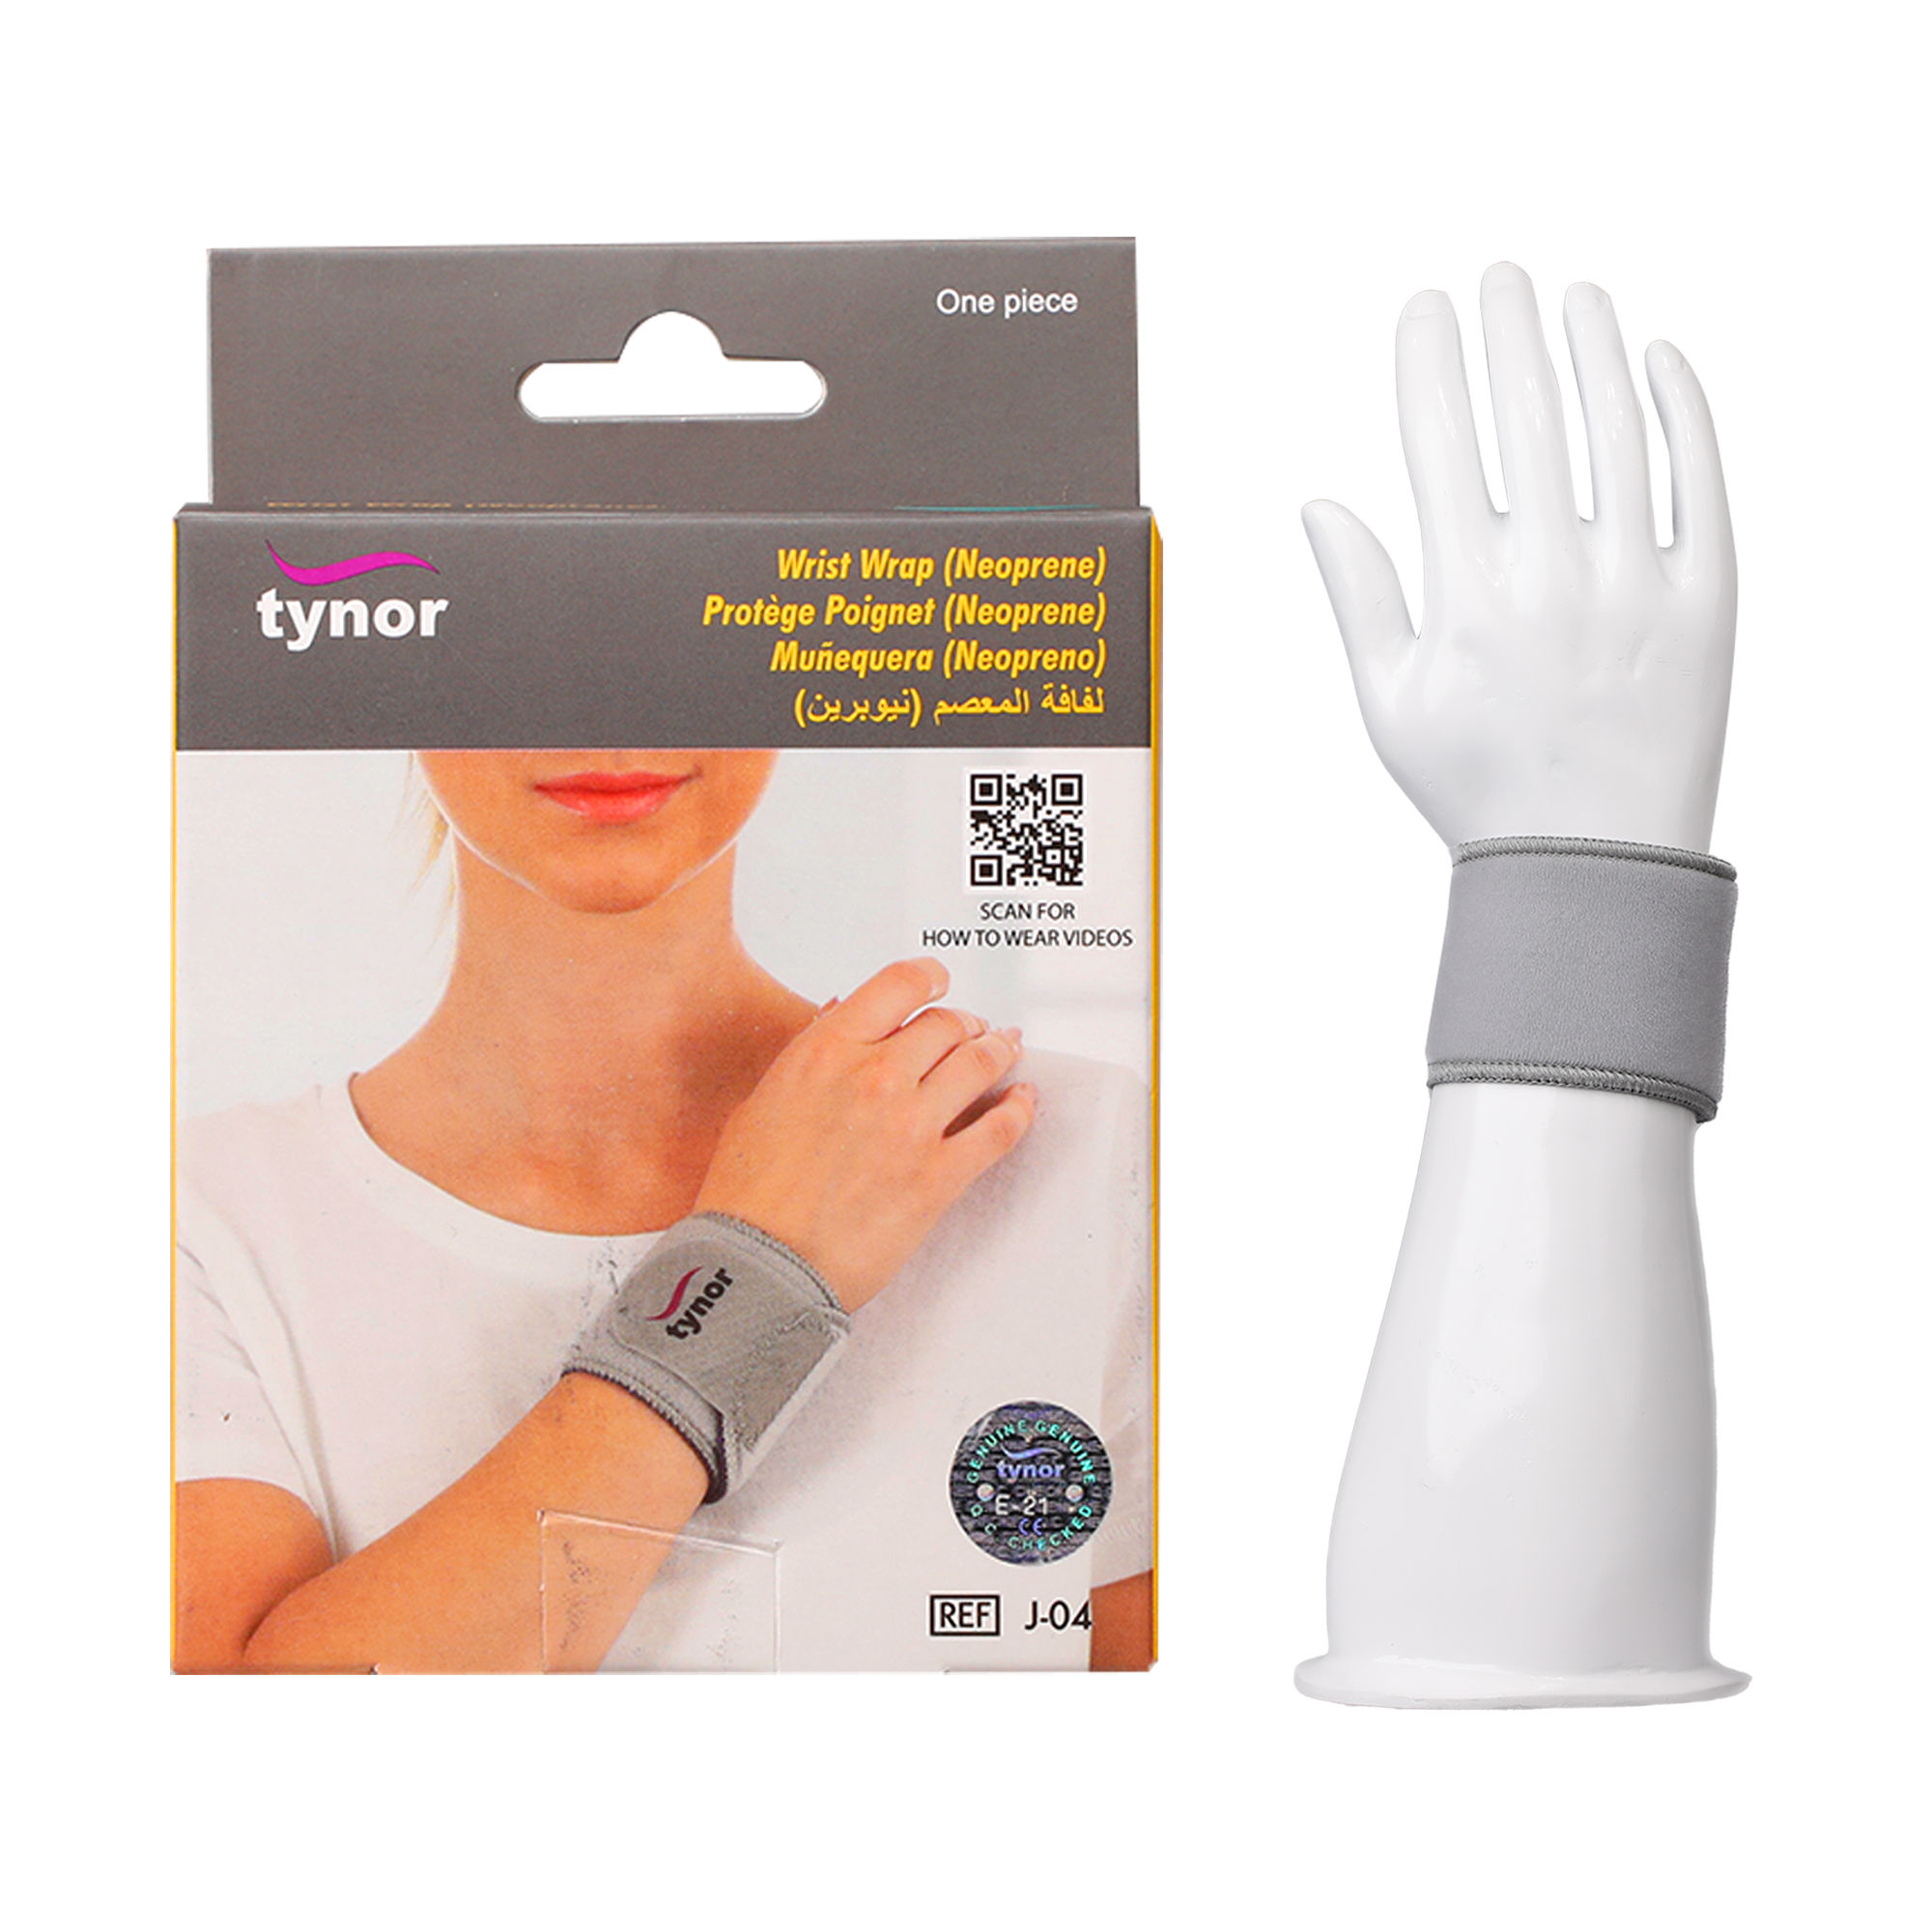 Tynor Wrist Wrap (Neoprene) Uni, 1 Count, Pack of 1 